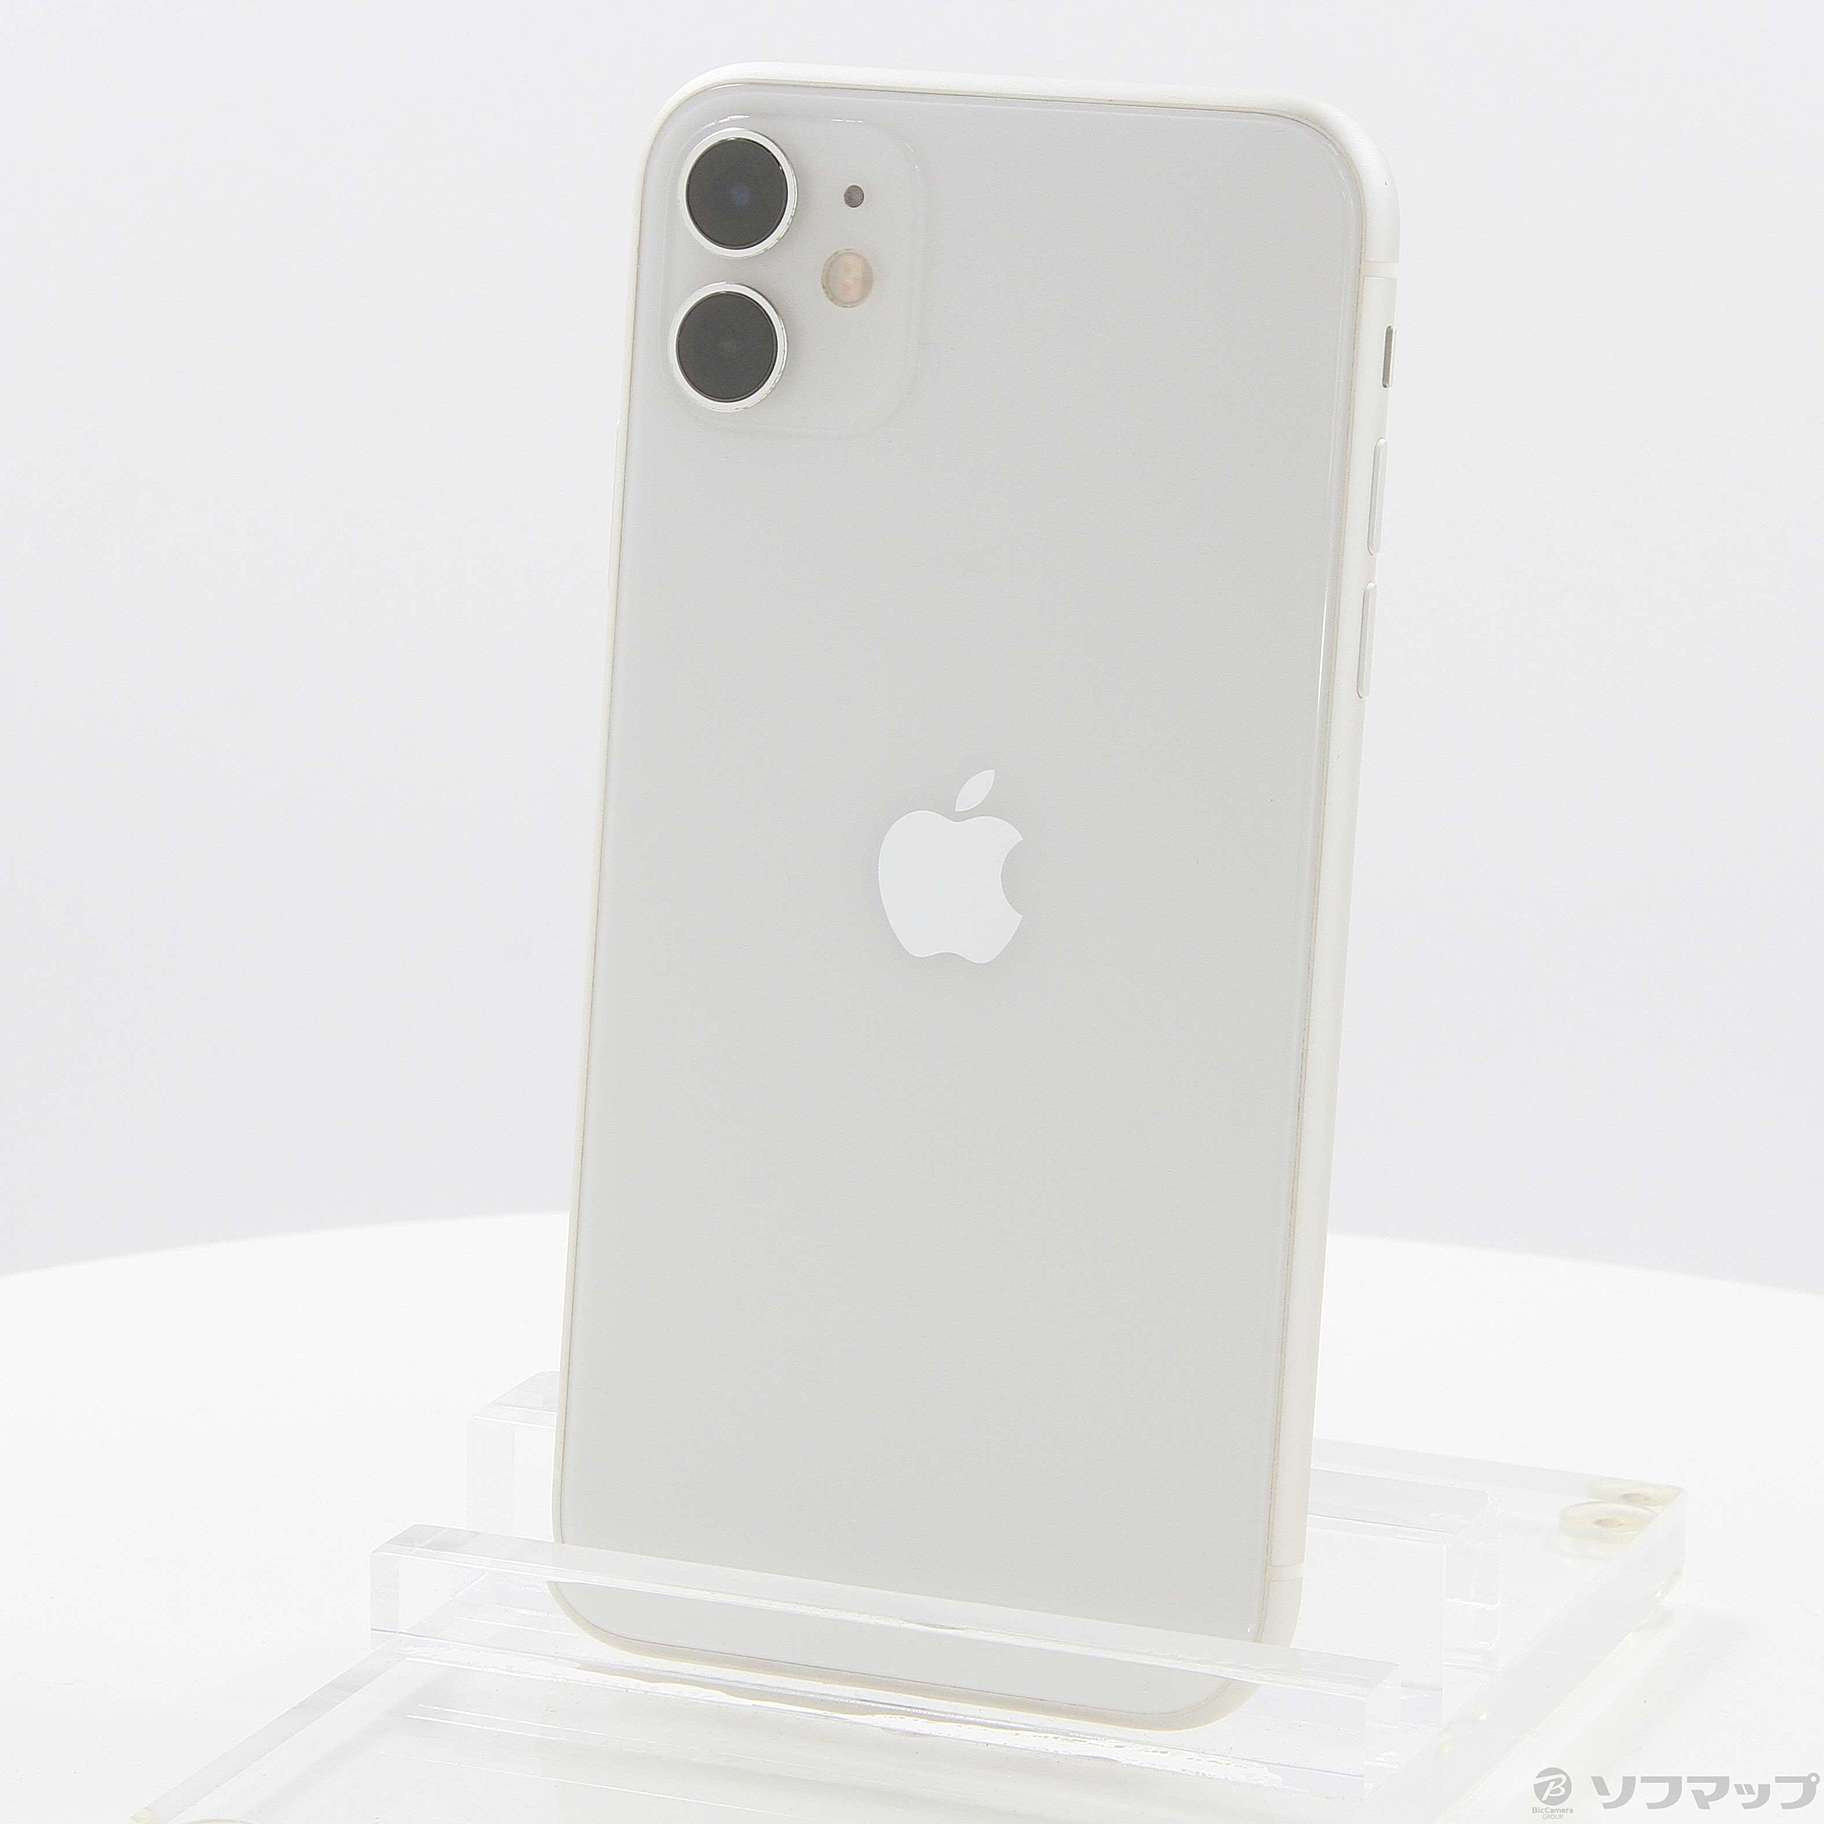 iPhone 11 256GB SIMフリー [ホワイト] 中古(白ロム)価格比較 - 価格.com